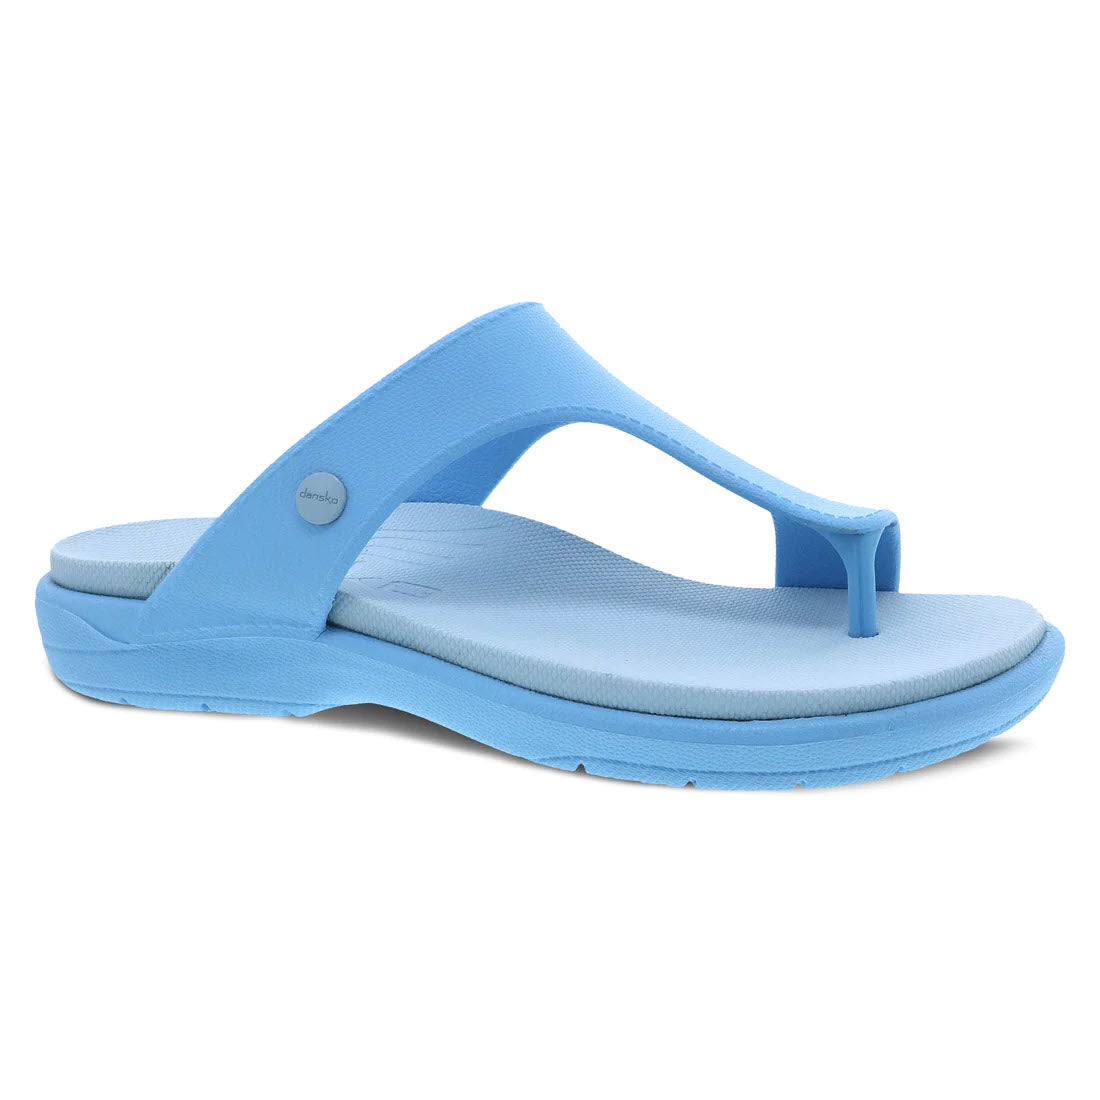 A single light blue, bio-based Dansko Krystal Blue - Womens flip-flop sandal on a white background.